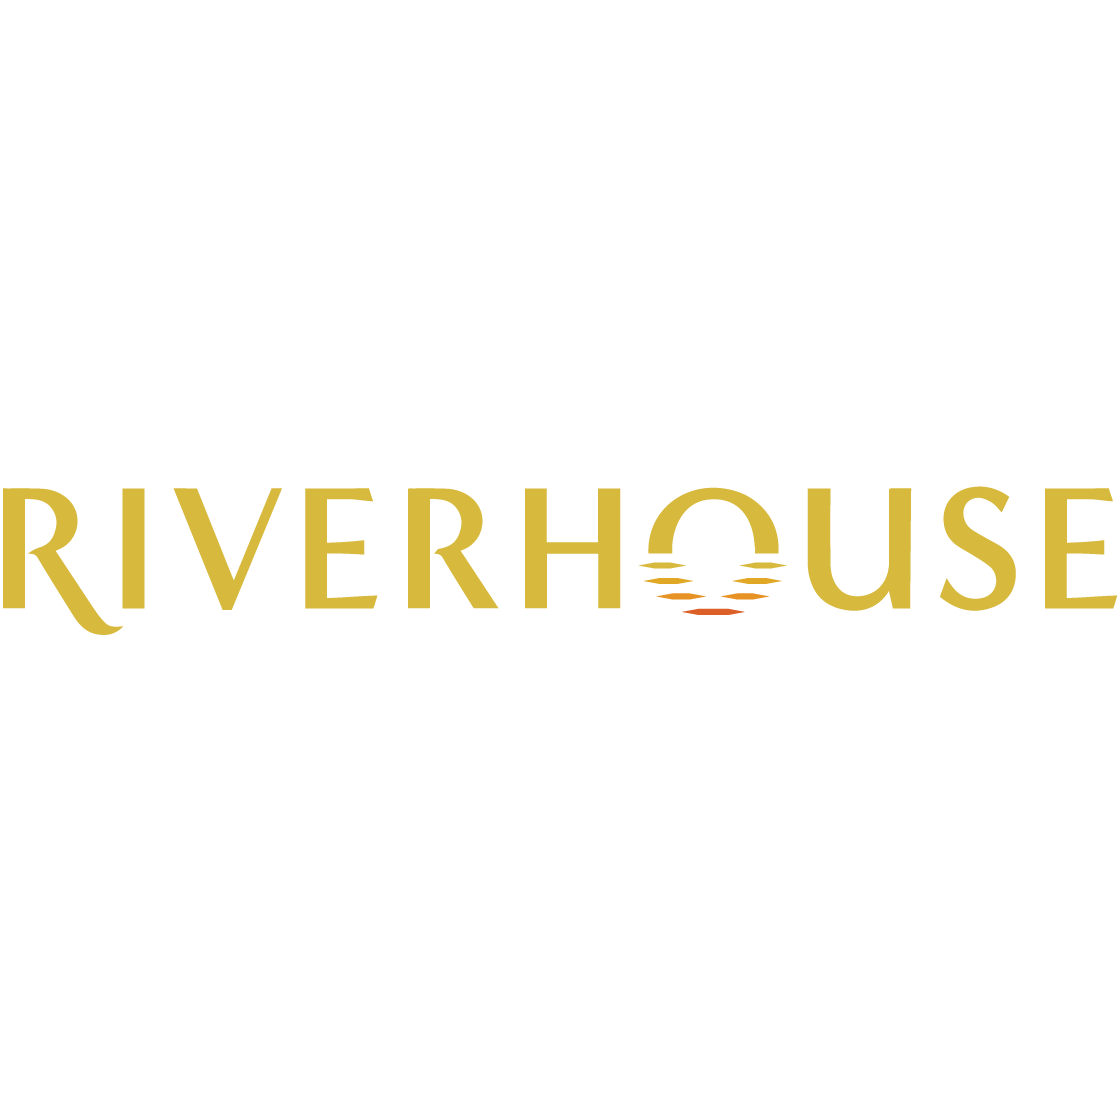 Riverhouse Apartments - Fargo, ND 58102 - (833)890-4218 | ShowMeLocal.com